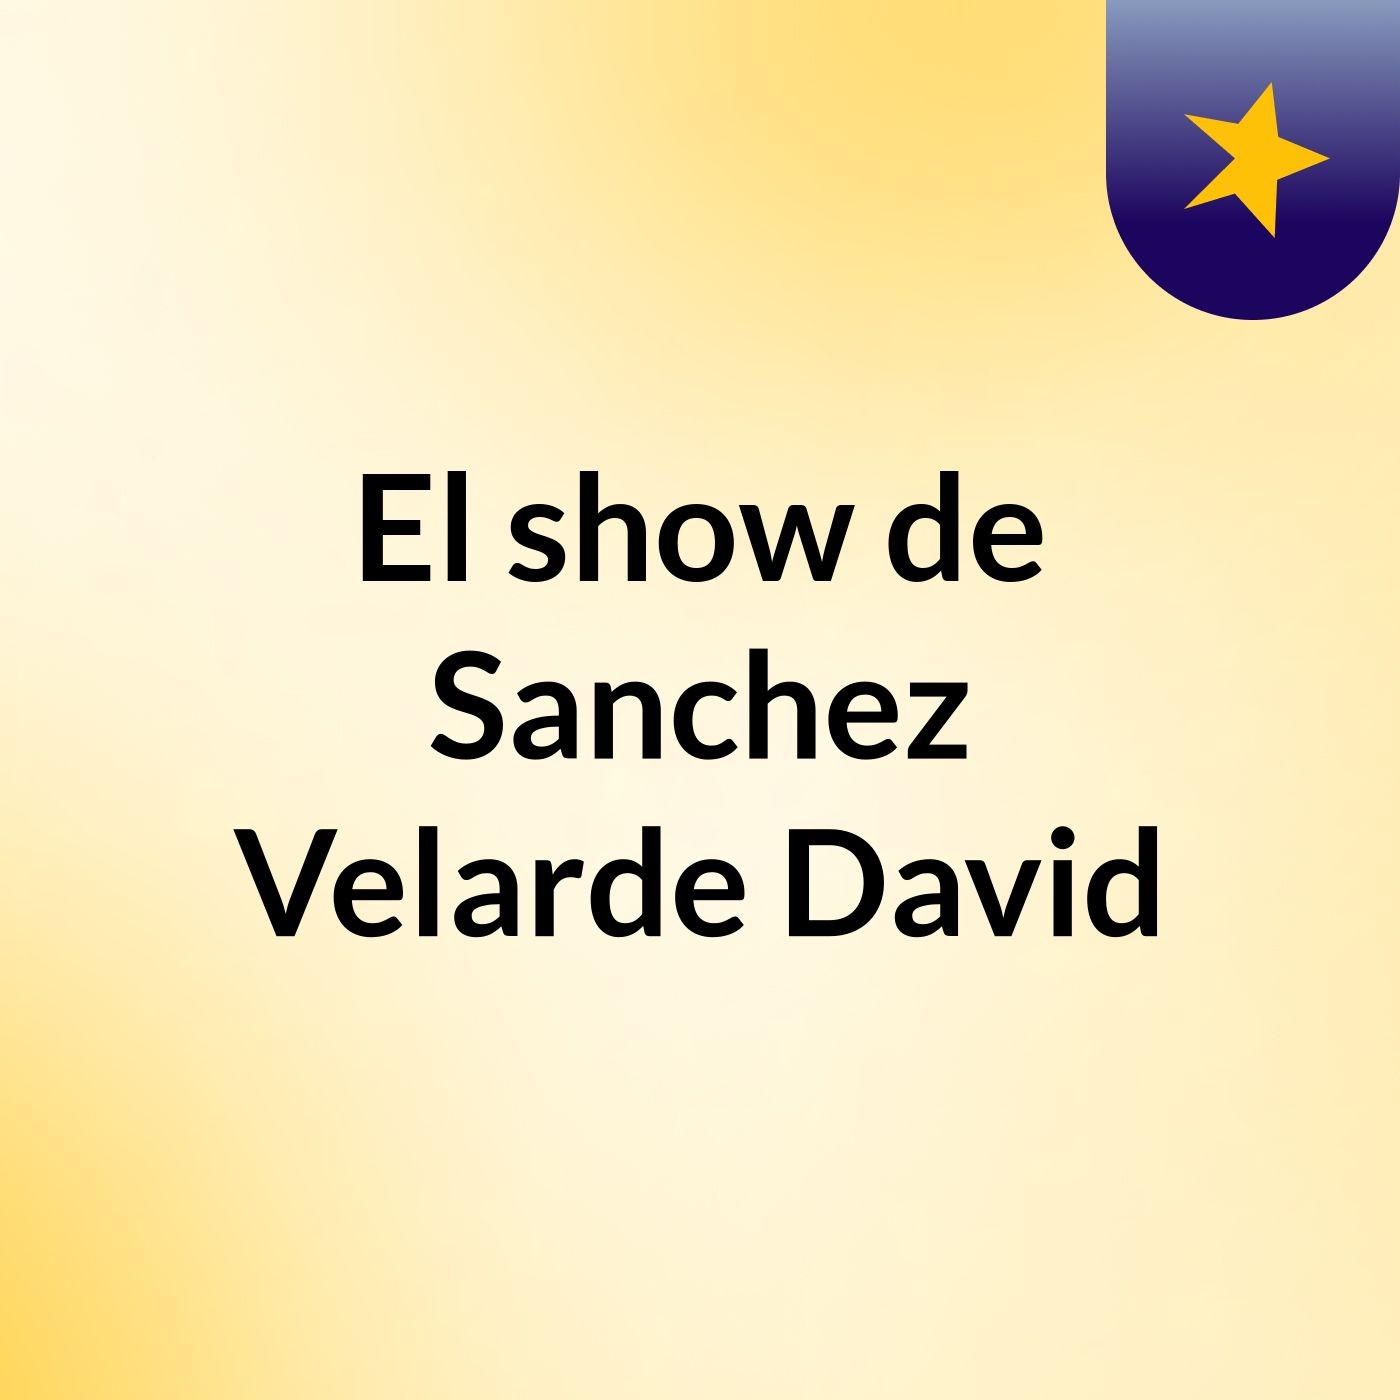 El show de Sanchez Velarde David